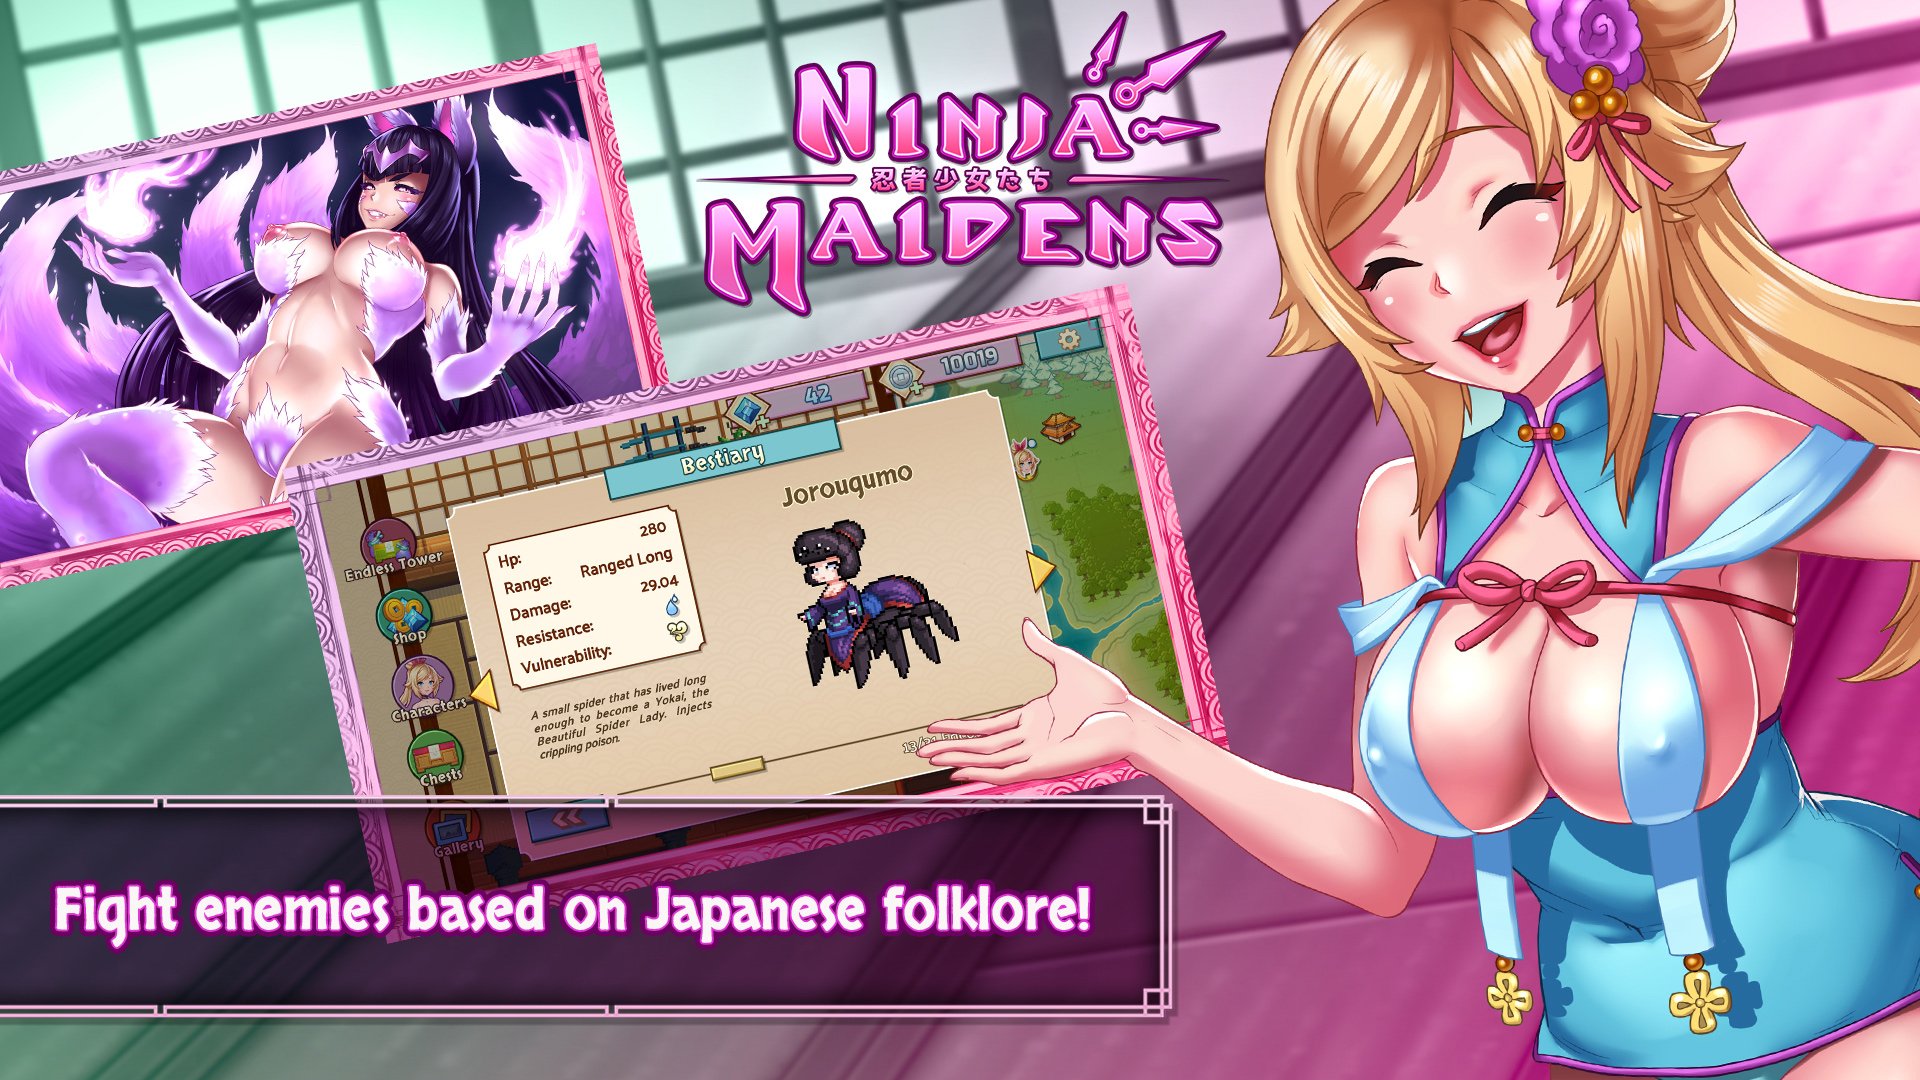 Visiting Spider Hentai - Ninja Maidens - RPG Sex Game | Nutaku